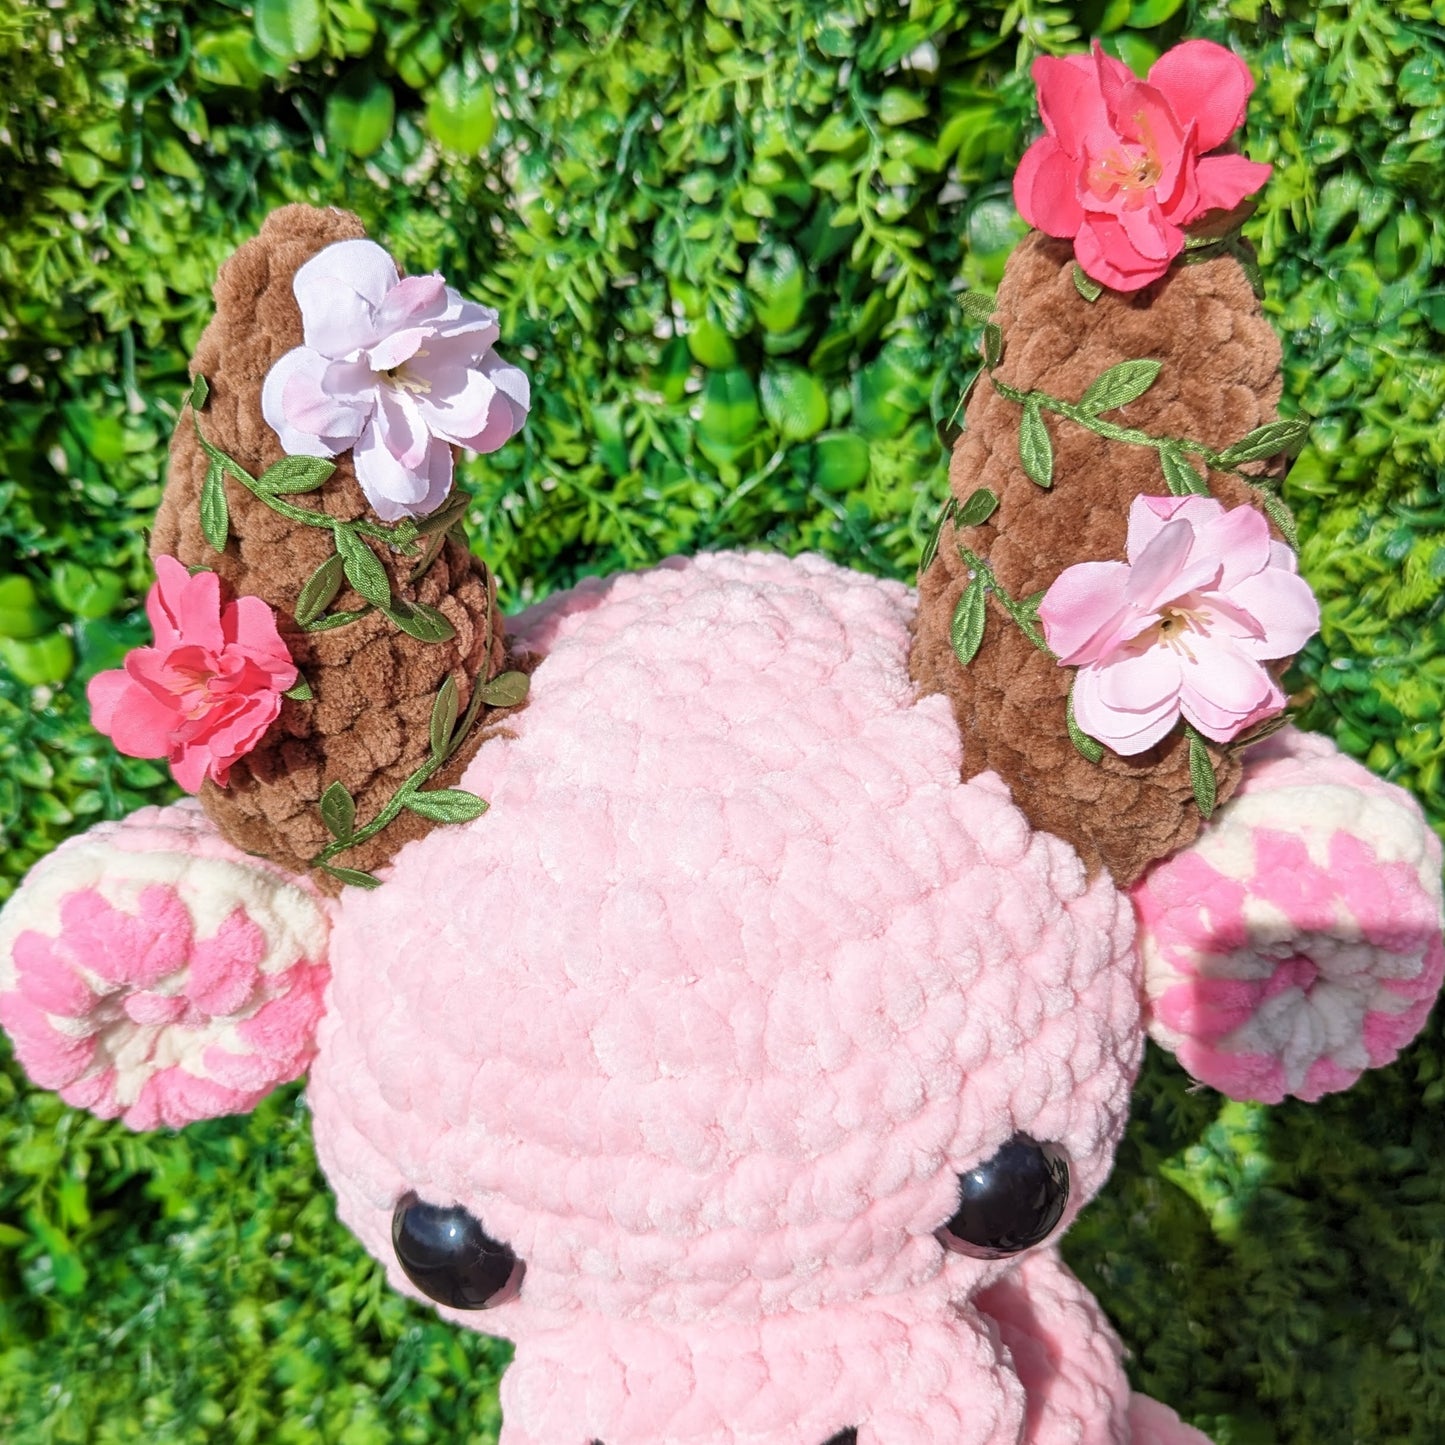 Jumbo Sakura Cherry Blossom Baphomet Goat Crochet Plushie [Archived]